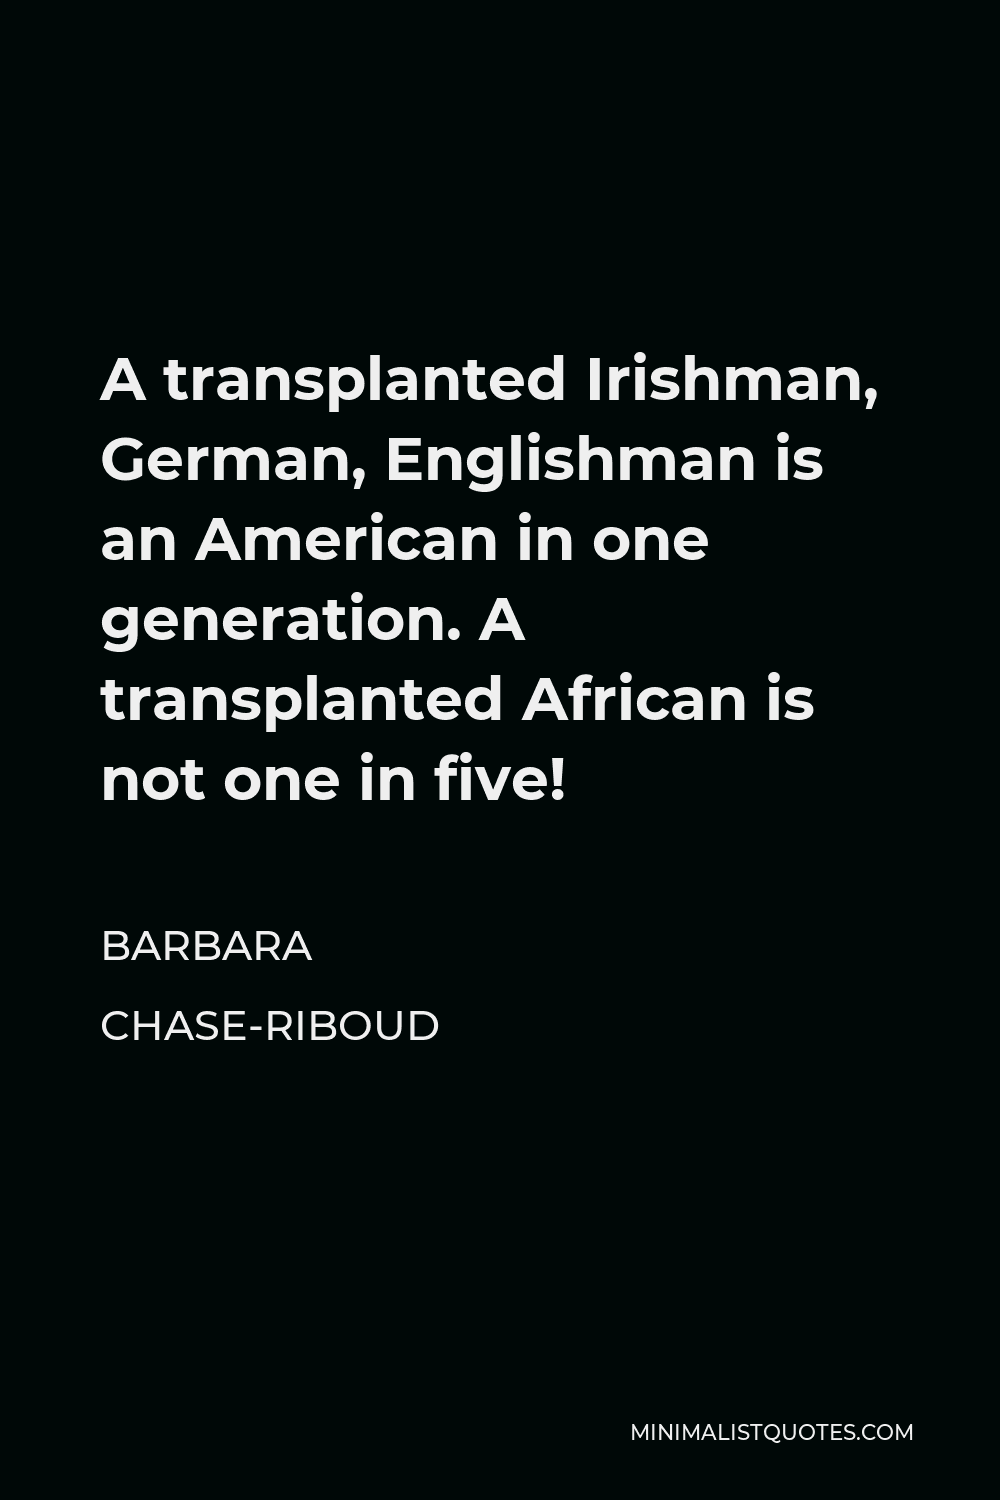 Barbara Chase-Riboud Quote - A transplanted Irishman, German, Englishman is an American in one generation. A transplanted African is not one in five!